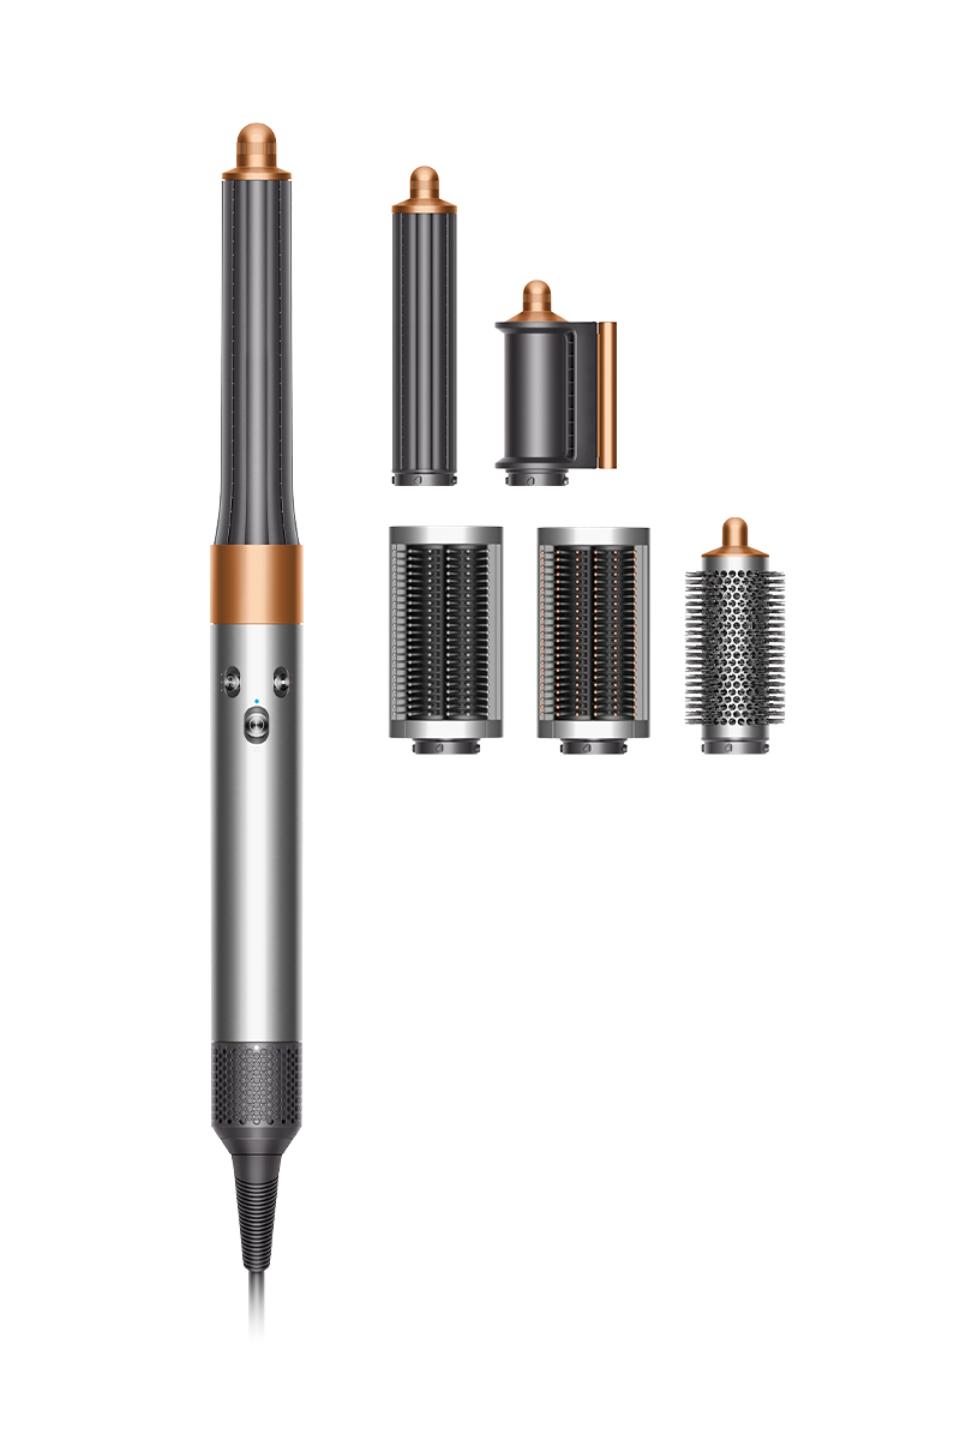 Dyson Airwrap™ Multi-styler Complete Long Copper/Nickel | 400720-01